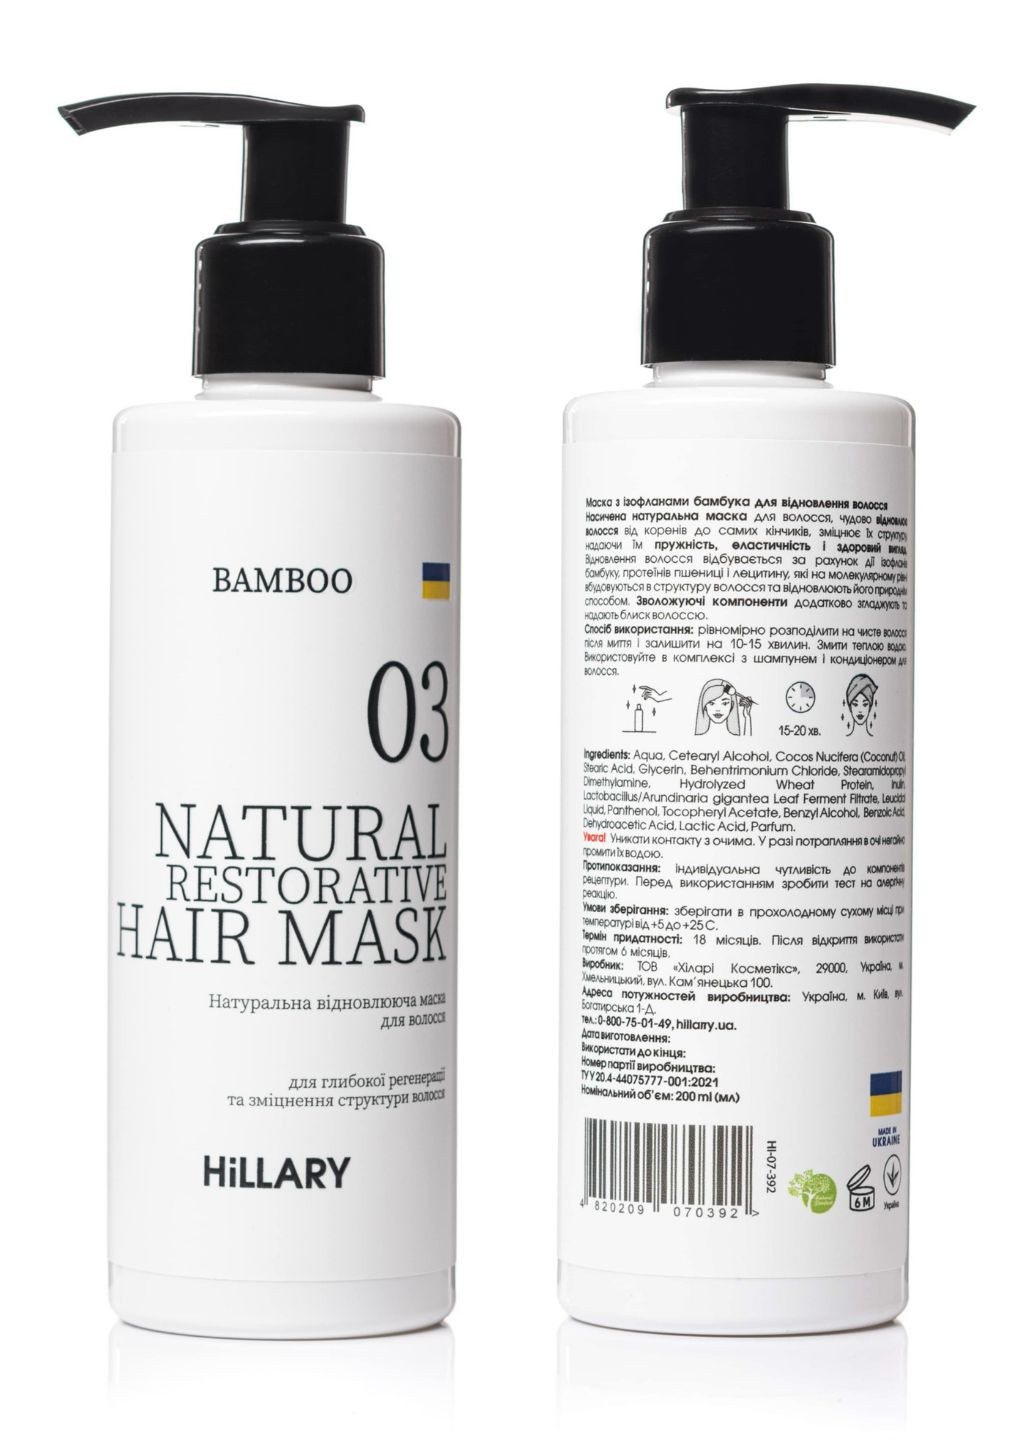 Комплекс для сухого типа волос Aloe Micellar Moisturizing + Натуральная маска Bamboo Hillary (280917424)